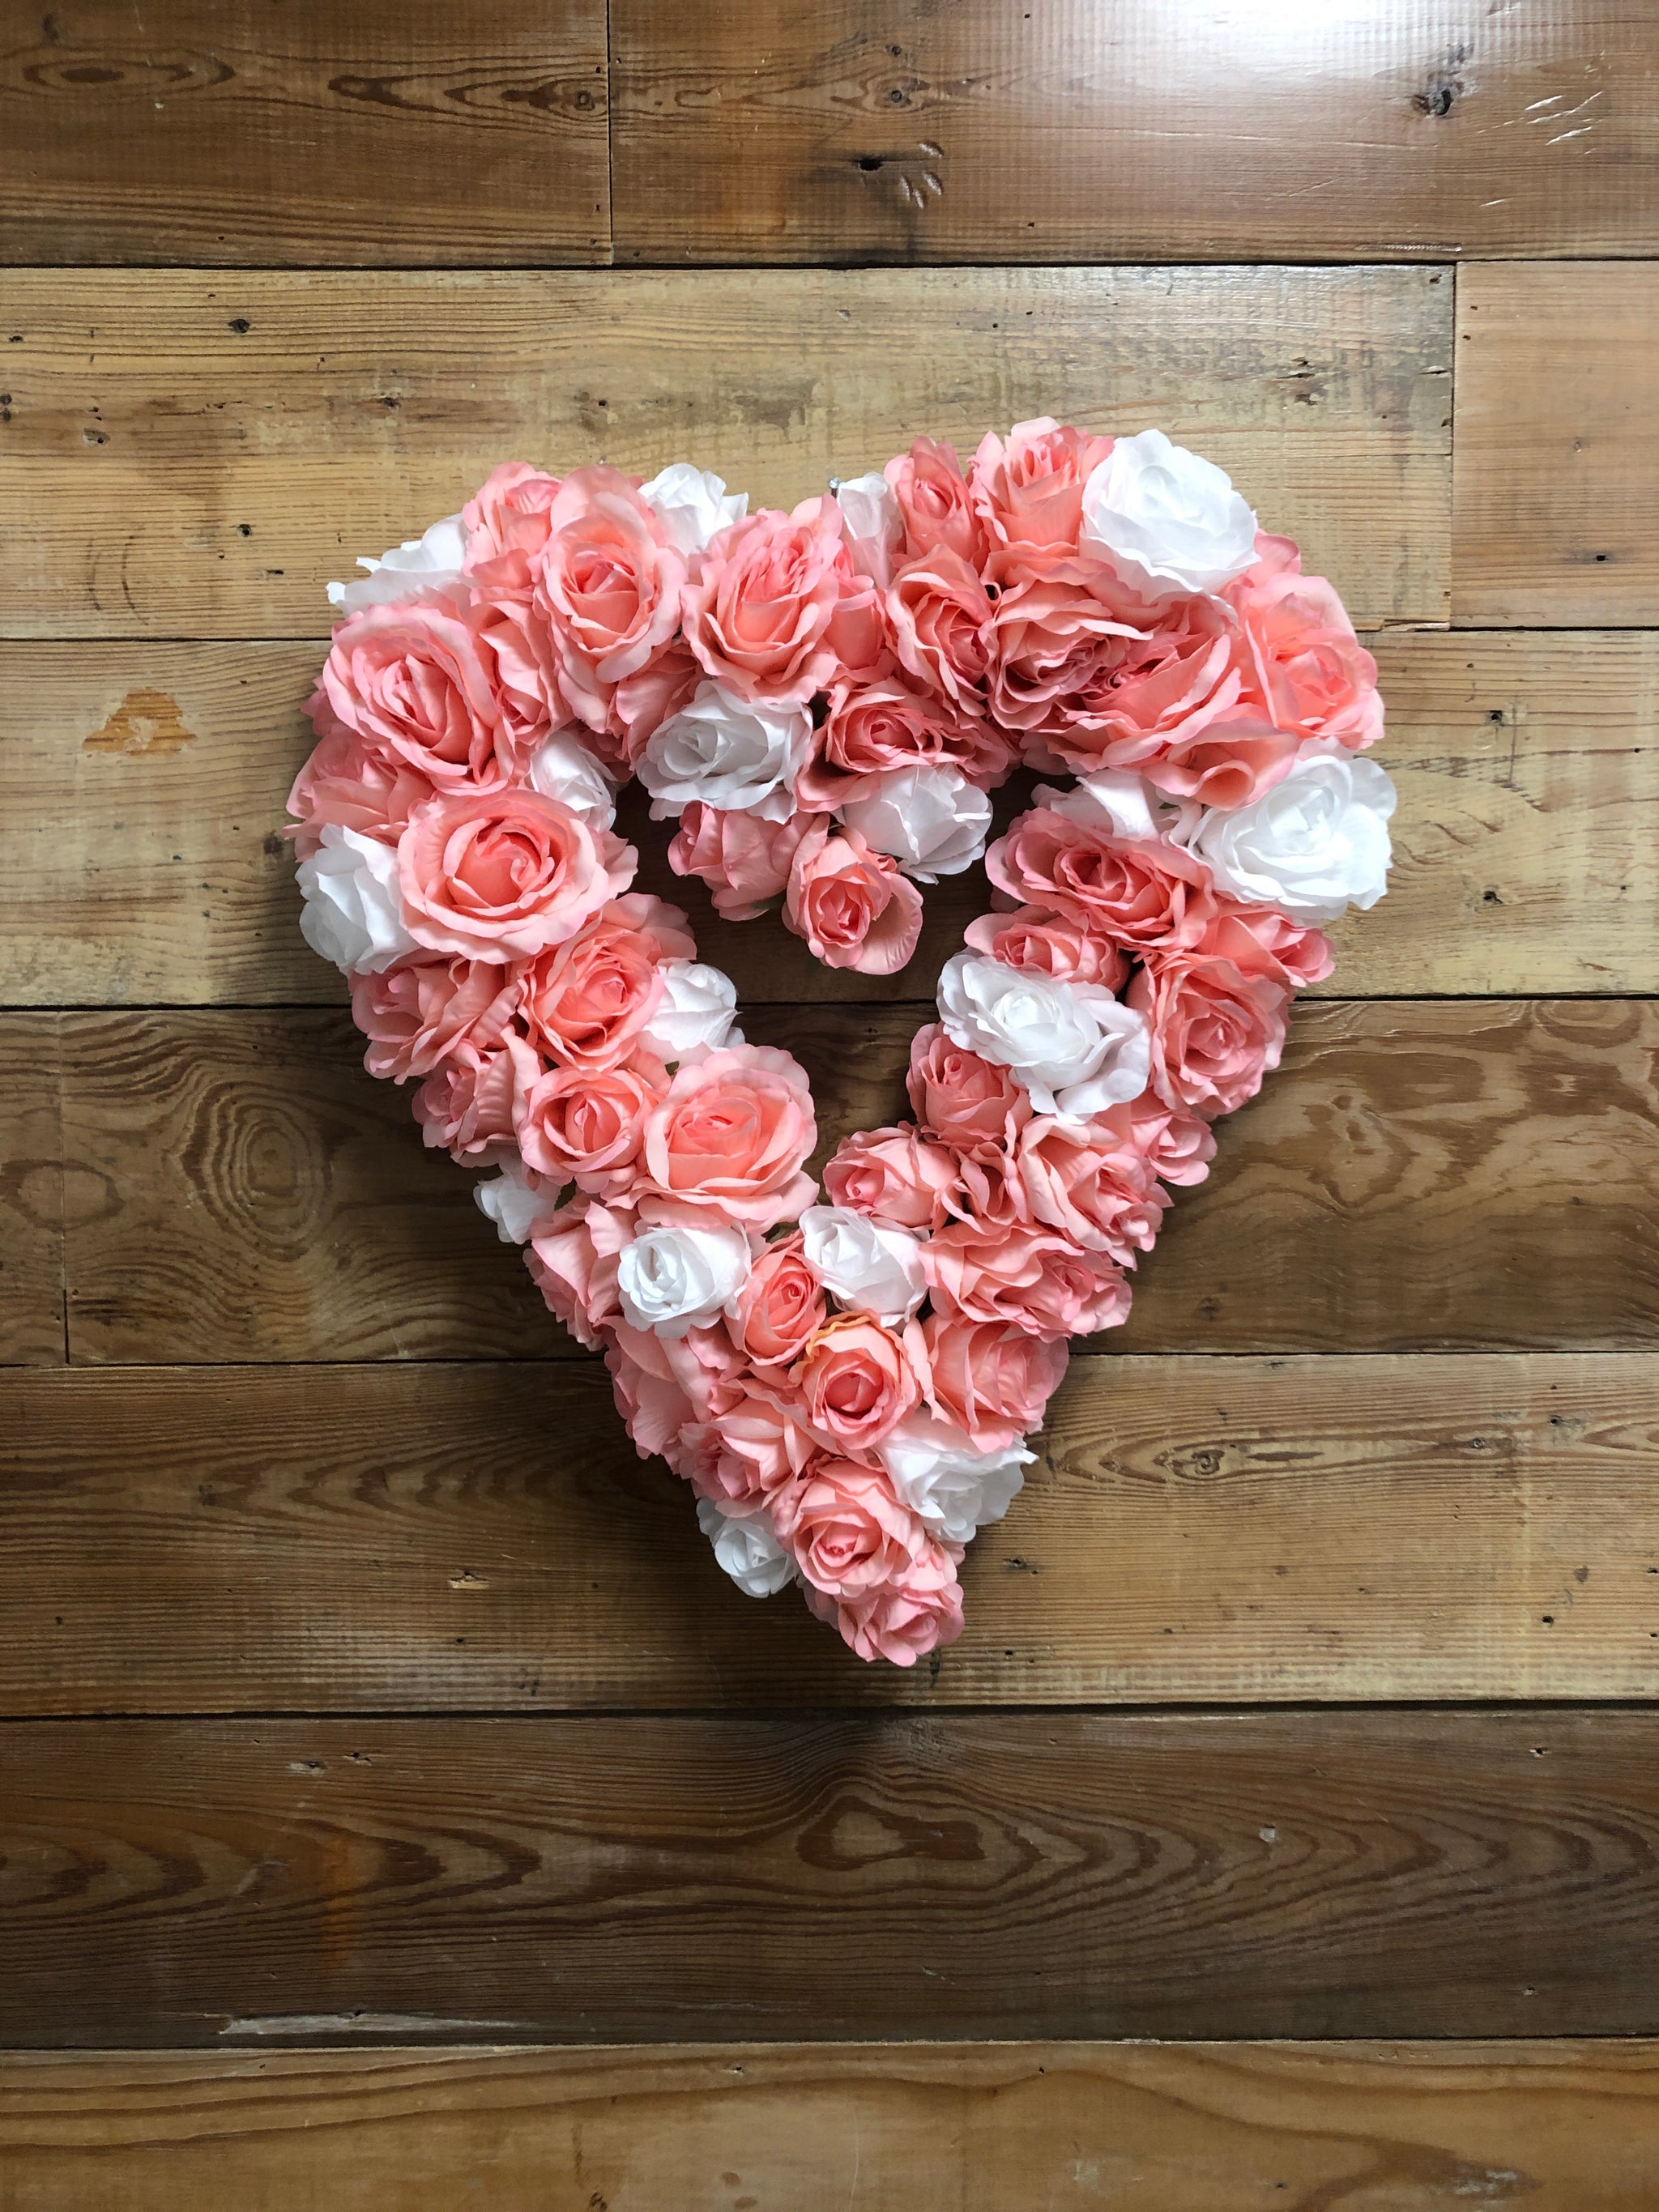 Valentines Wreath For Front Door Heart Shape Artificial Rose